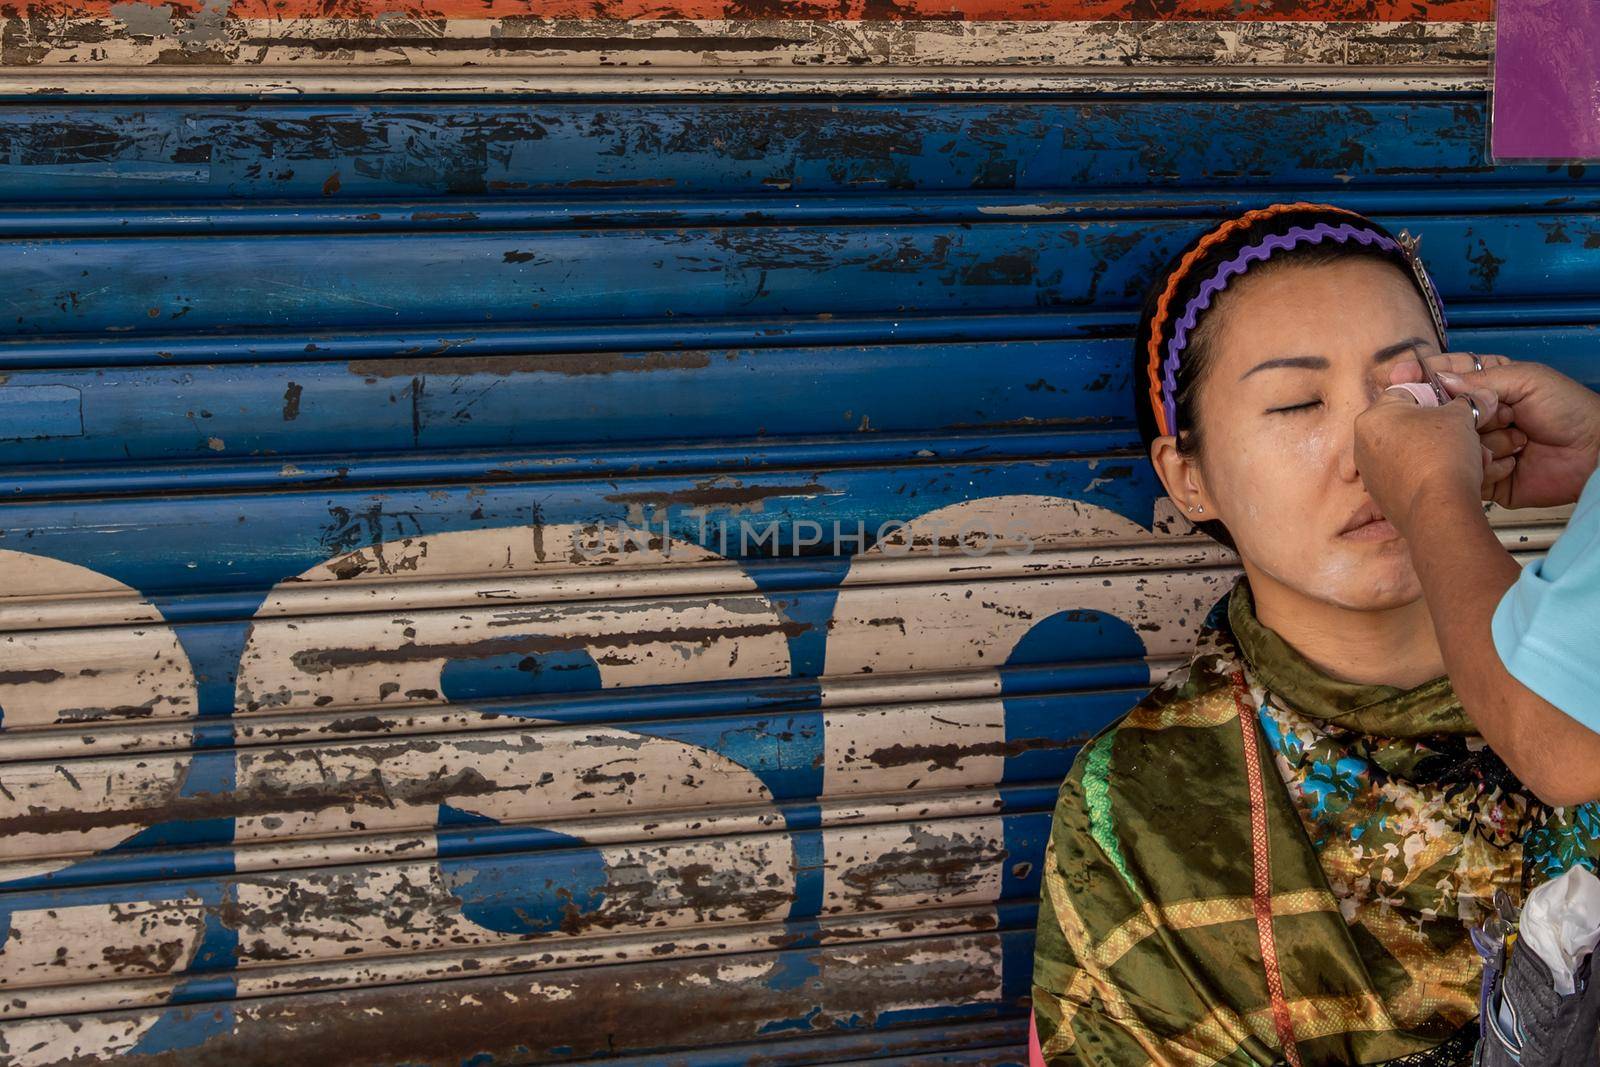 Yaowarat street merchant service customer face hair removal beauty by yarn. by tosirikul